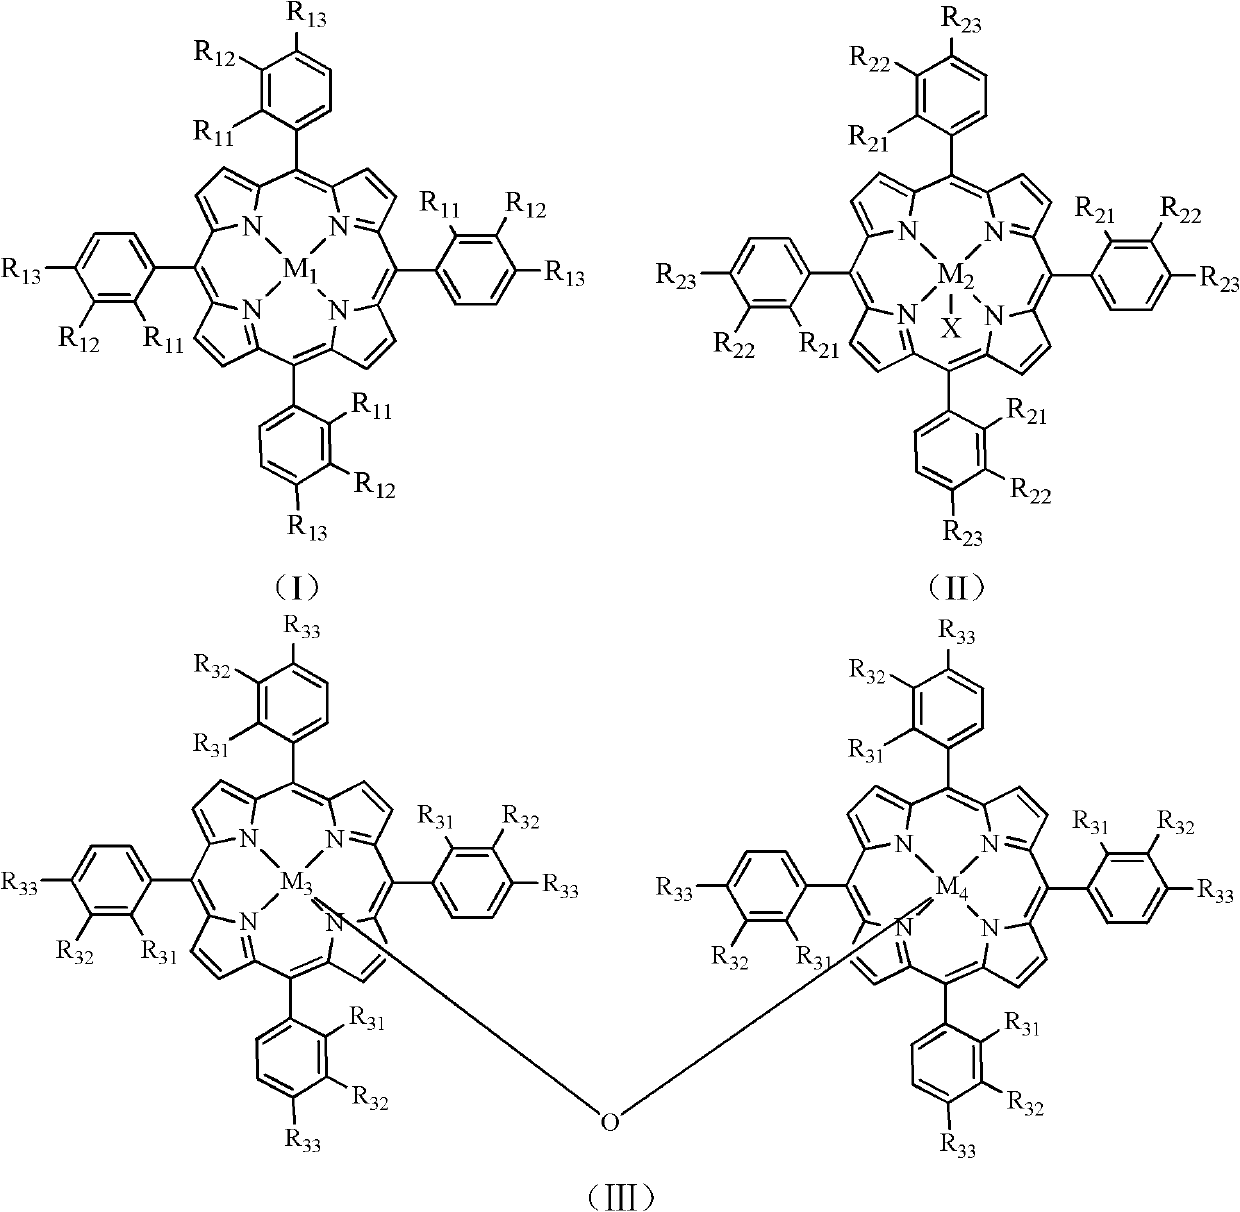 Process for preparing pyrazine-2-formic acid through metalloporphyrin catalytic oxidation of 2-methylpyrazine